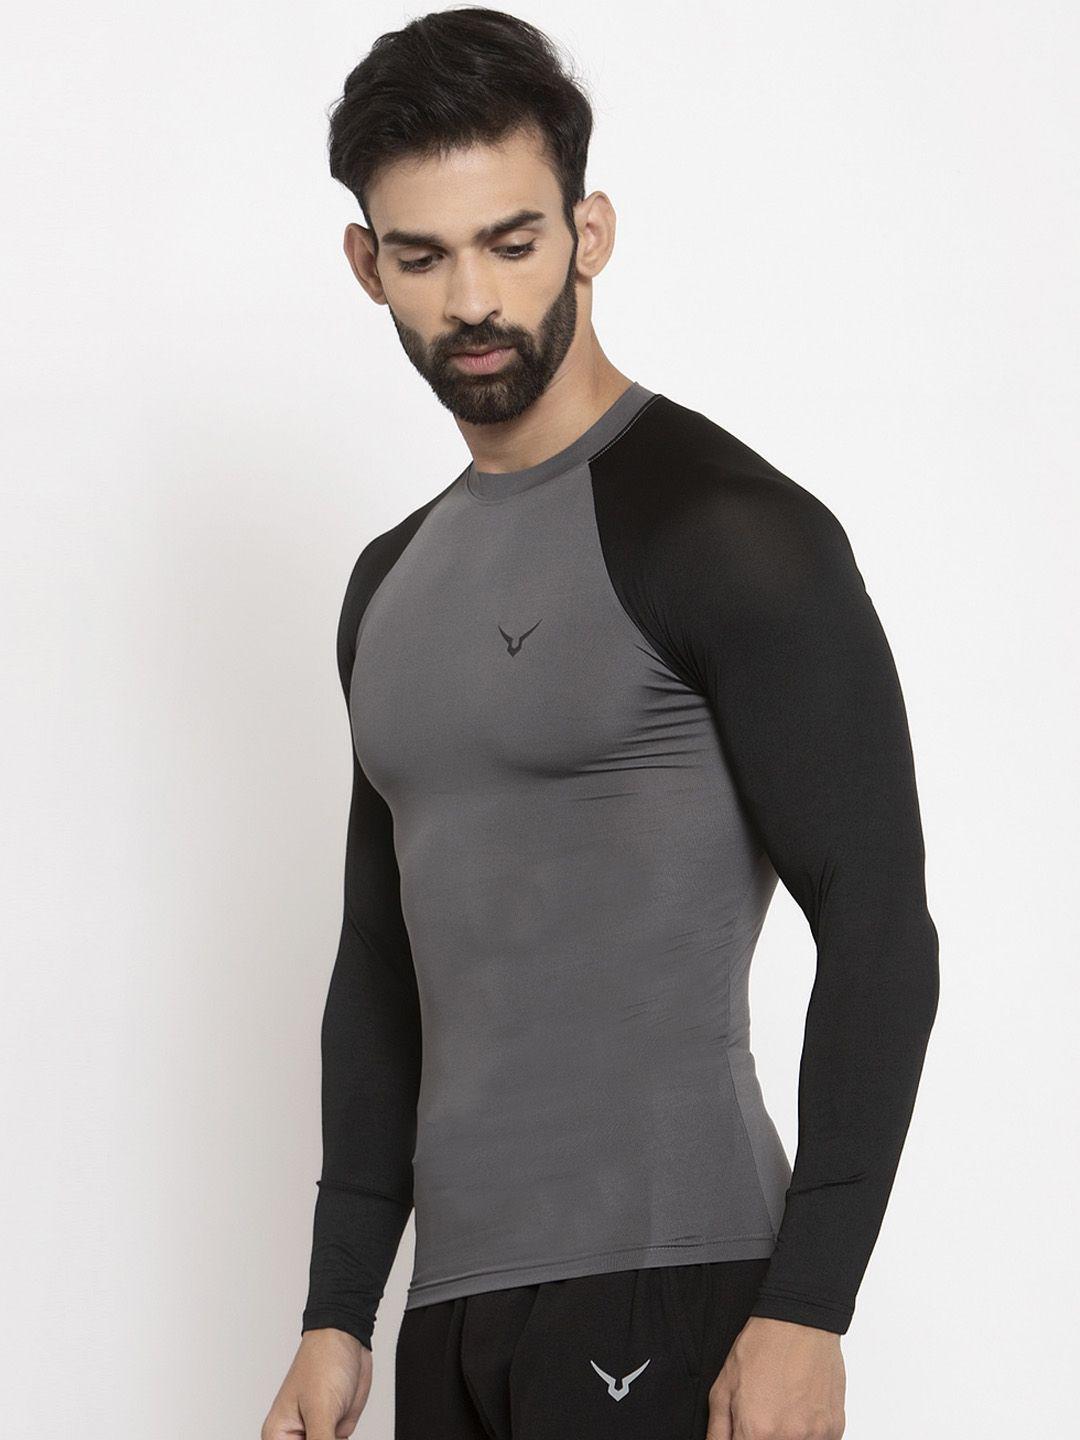 invincible-men-grey-&-black-colourblocked-round-neck-t-shirt